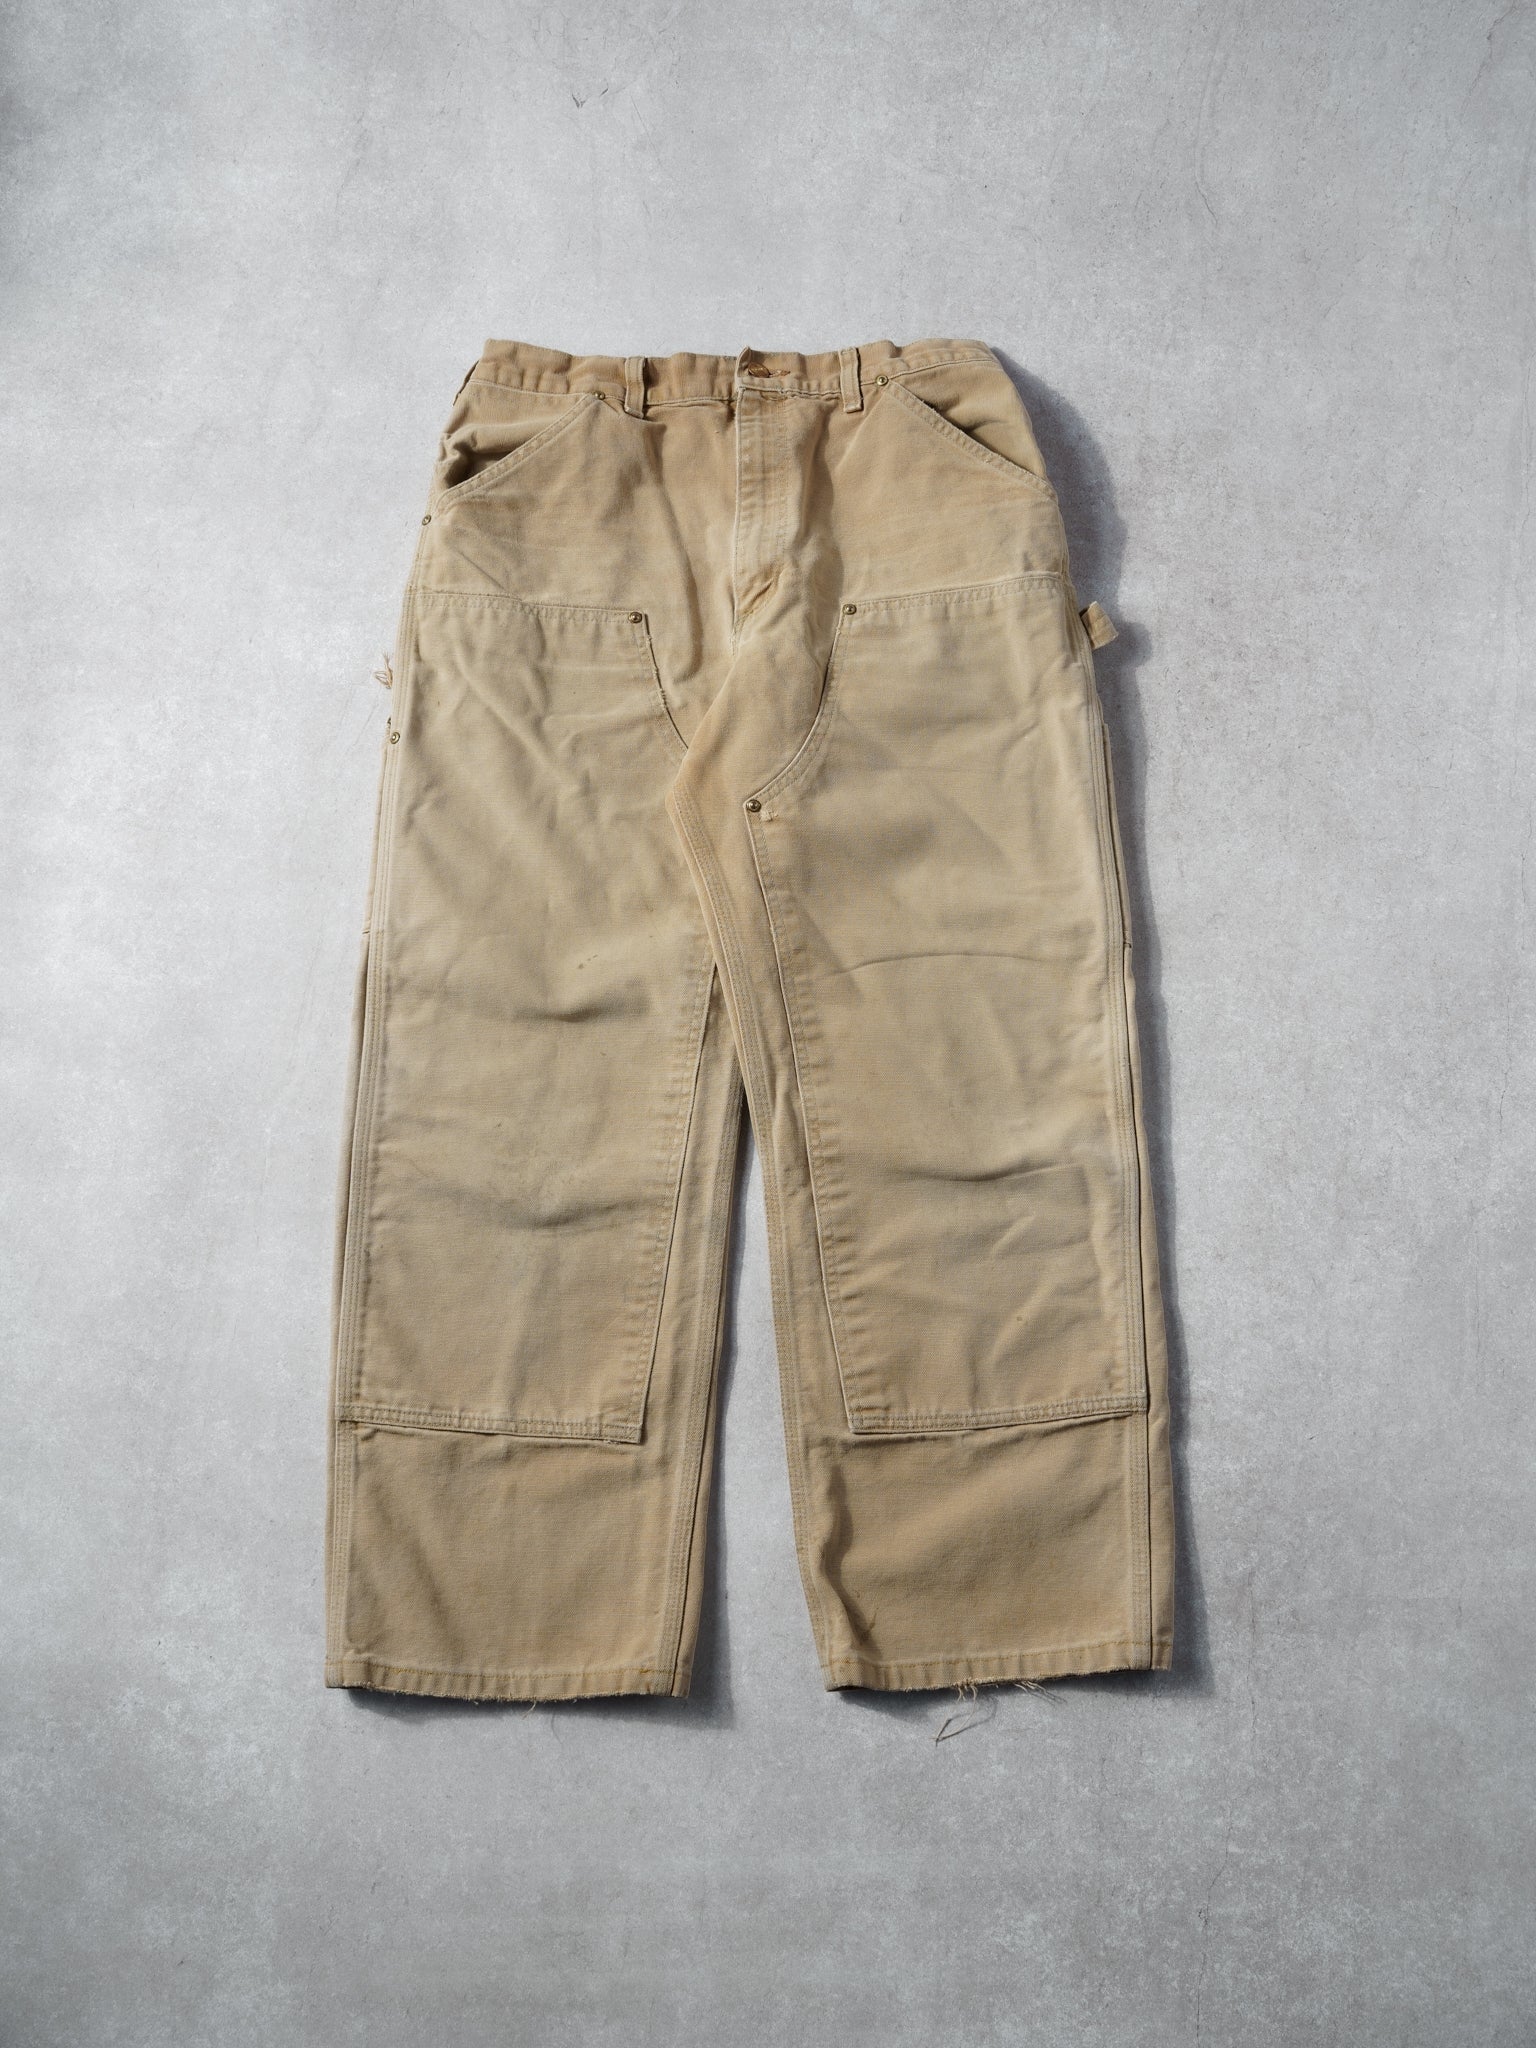 Vintage 90s Washed Khaki Carhartt Double Knee Carpenter Pants (30x26)